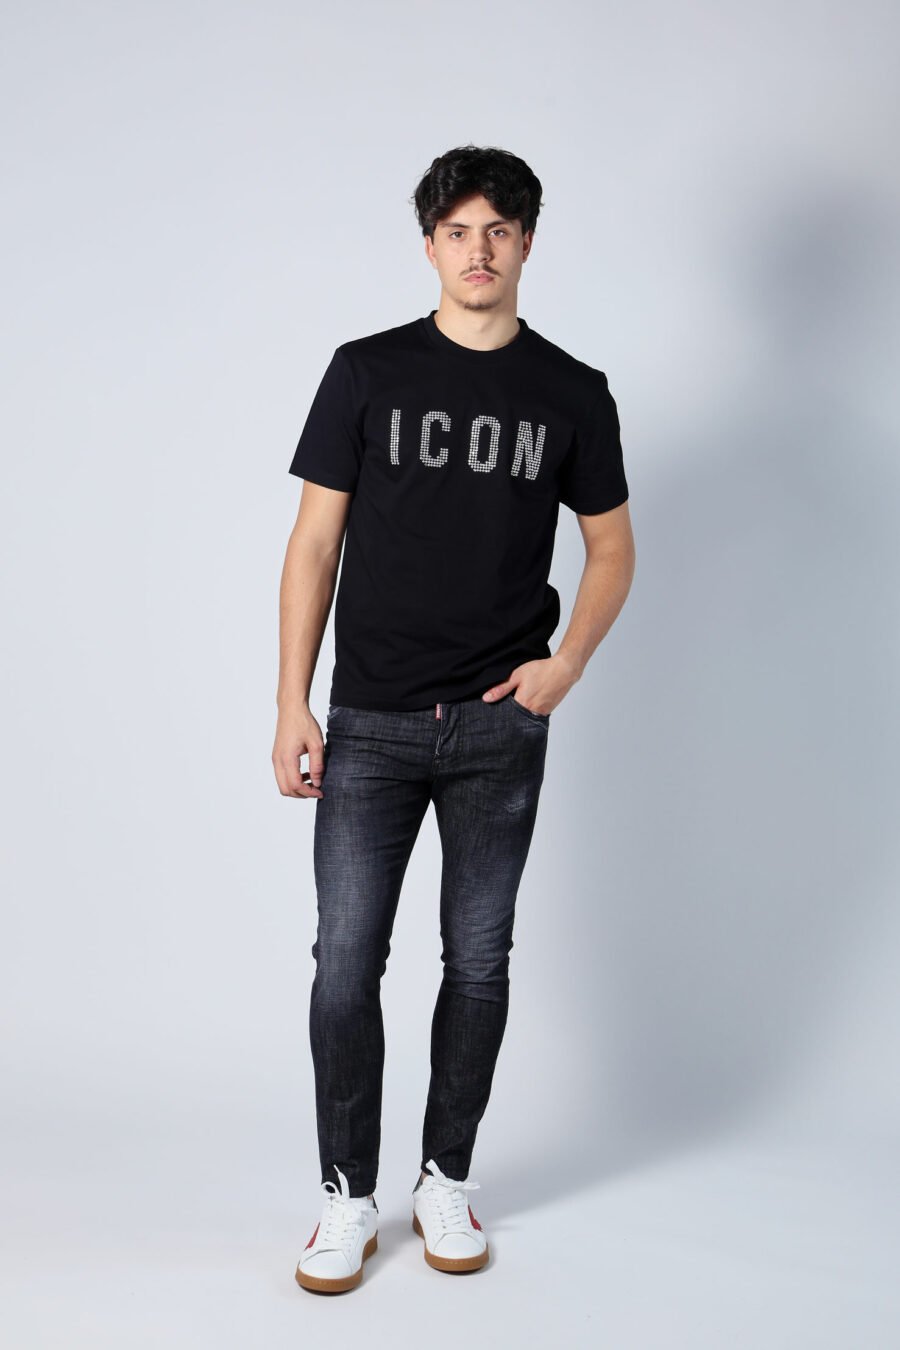 Black T-shirt with white checked "icon" logo - Untitled Catalog 05678